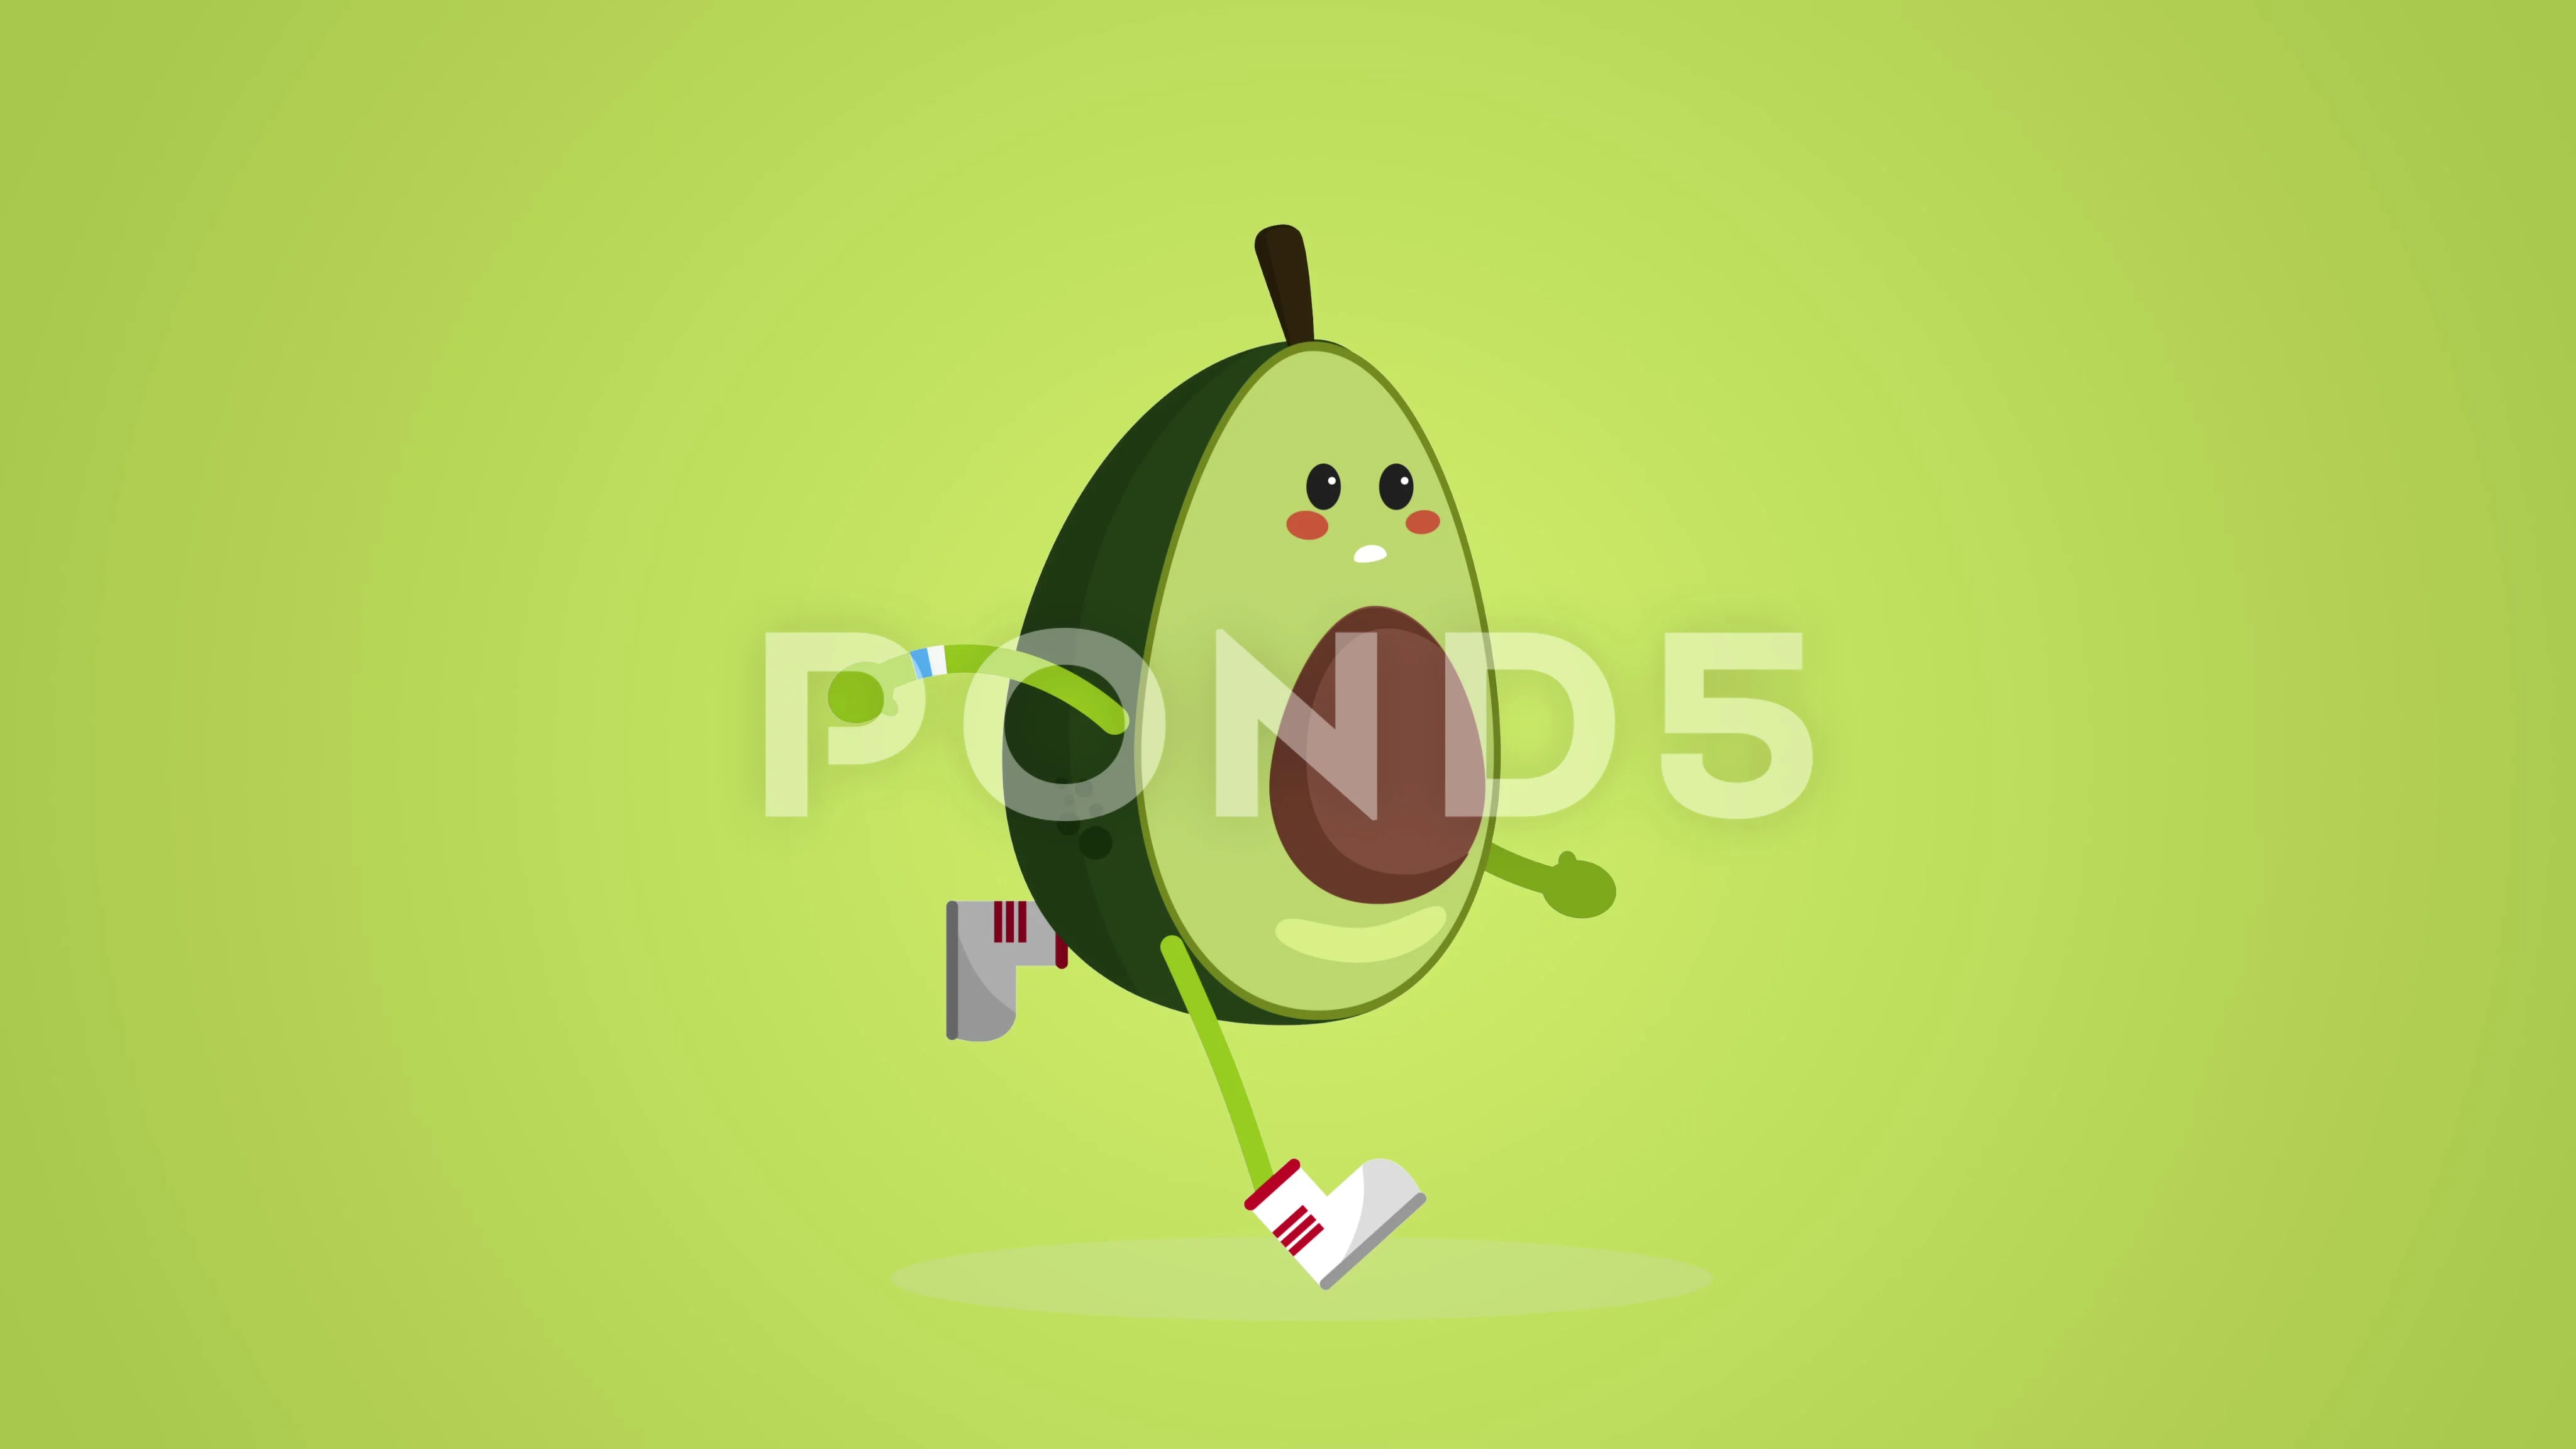 cute cartoon avocado